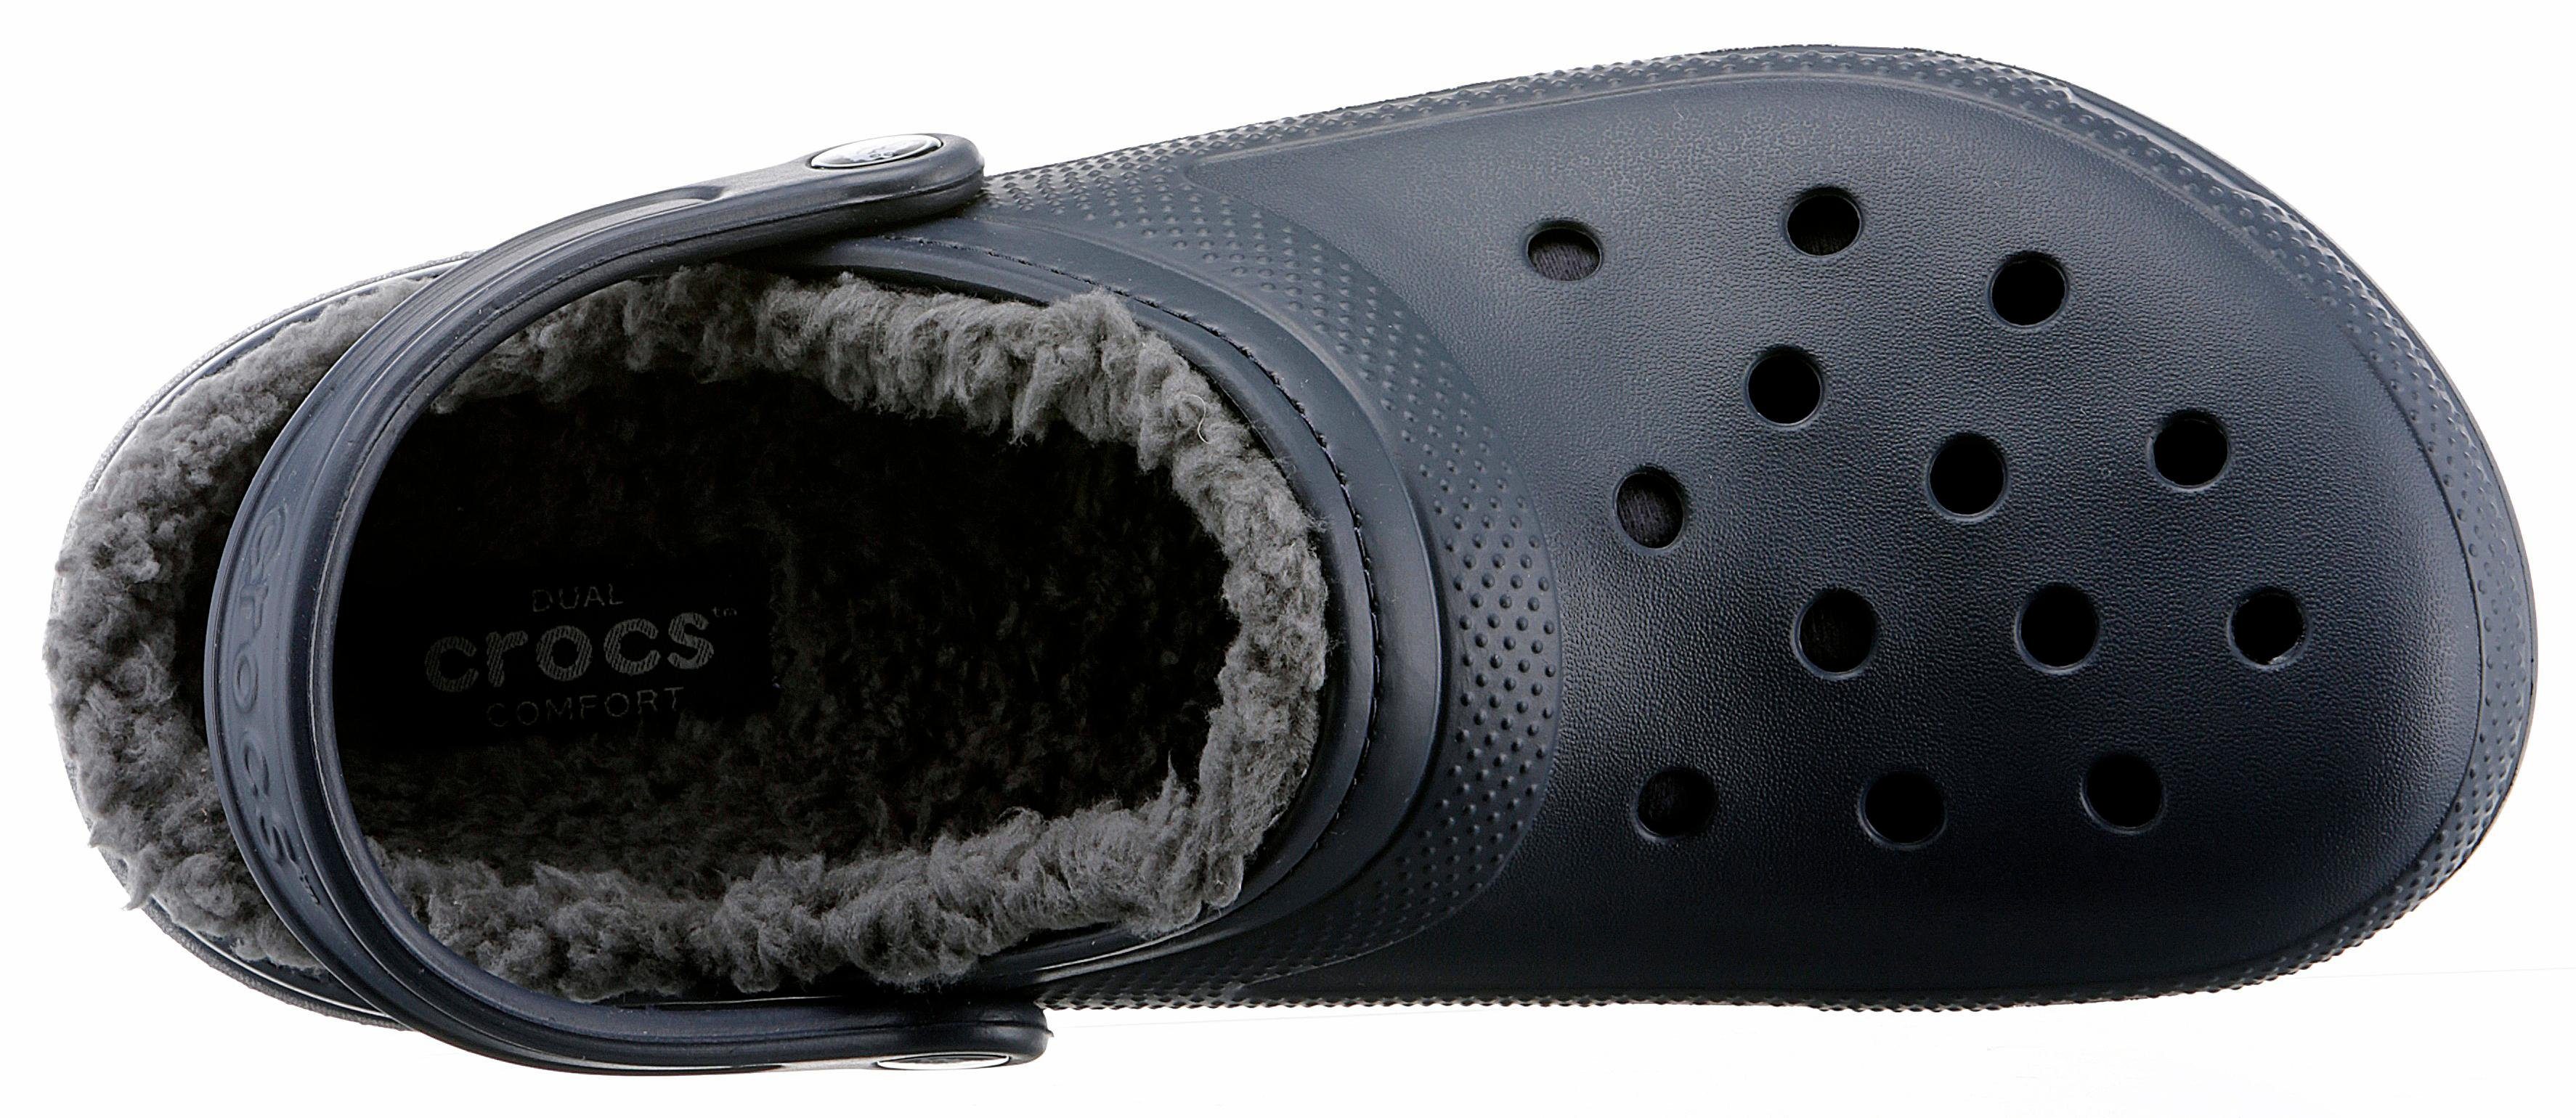 Crocs Classic Lined Clog mit navy-grau Hausschuh kuscheligem Fellimitat